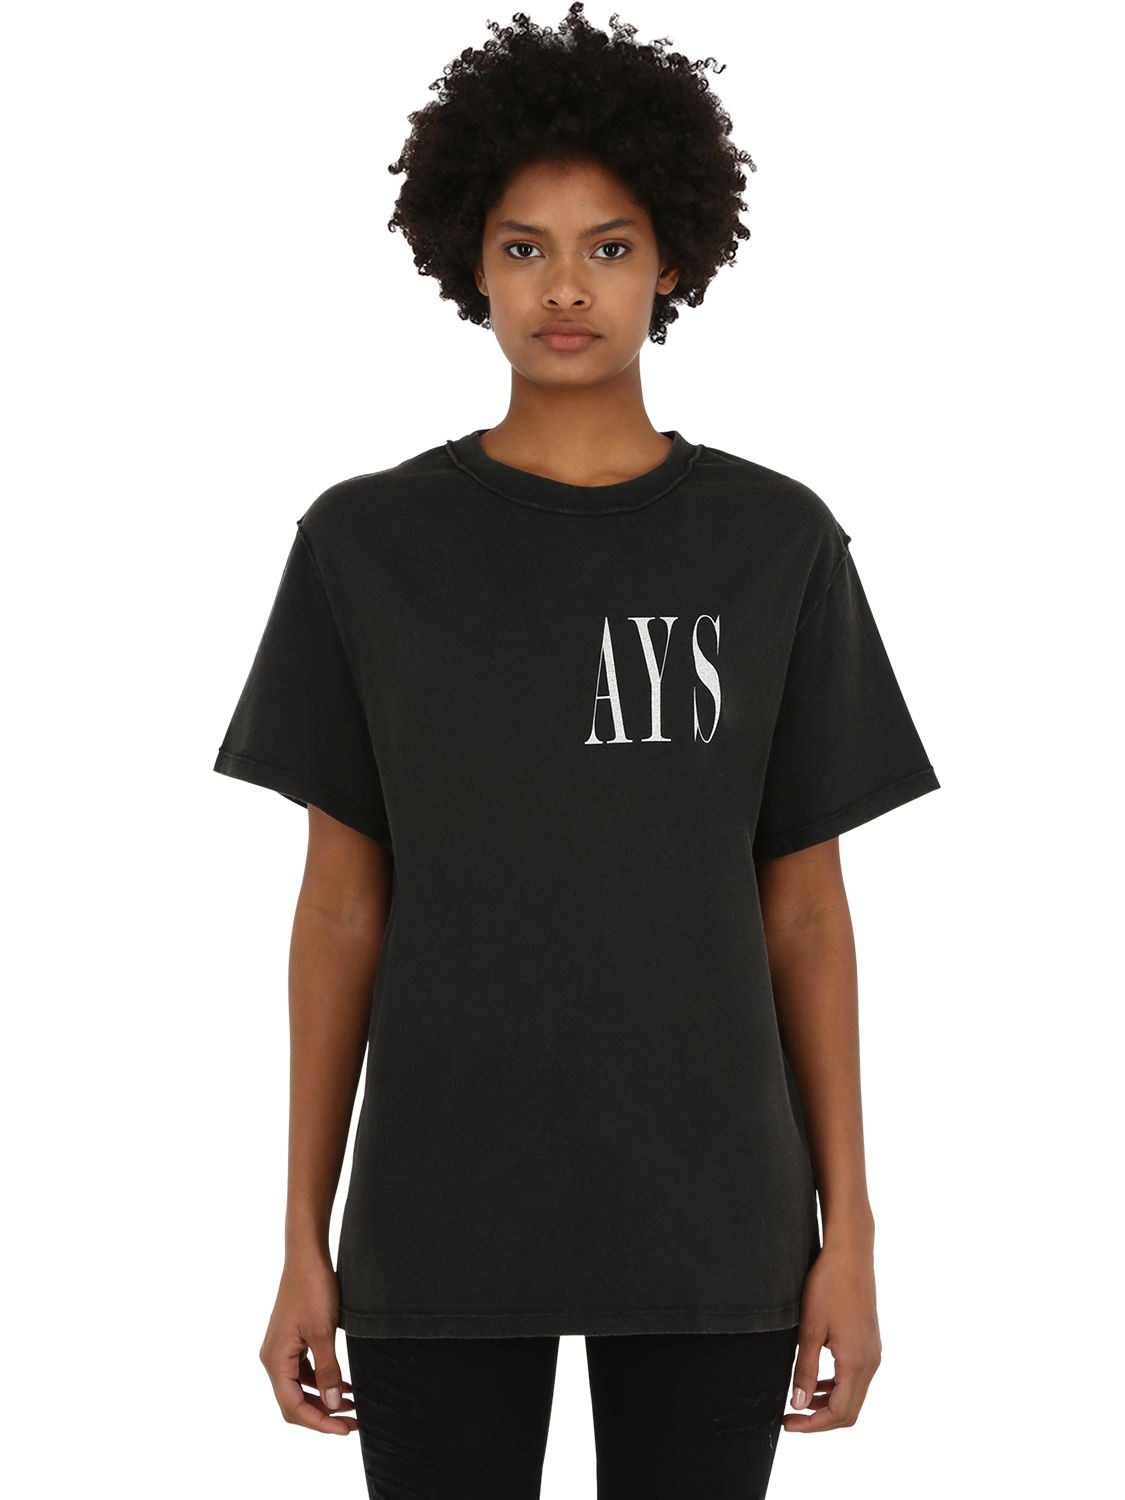 Askyurself Tour Feelings Cotton Jersey T-shirt In Black